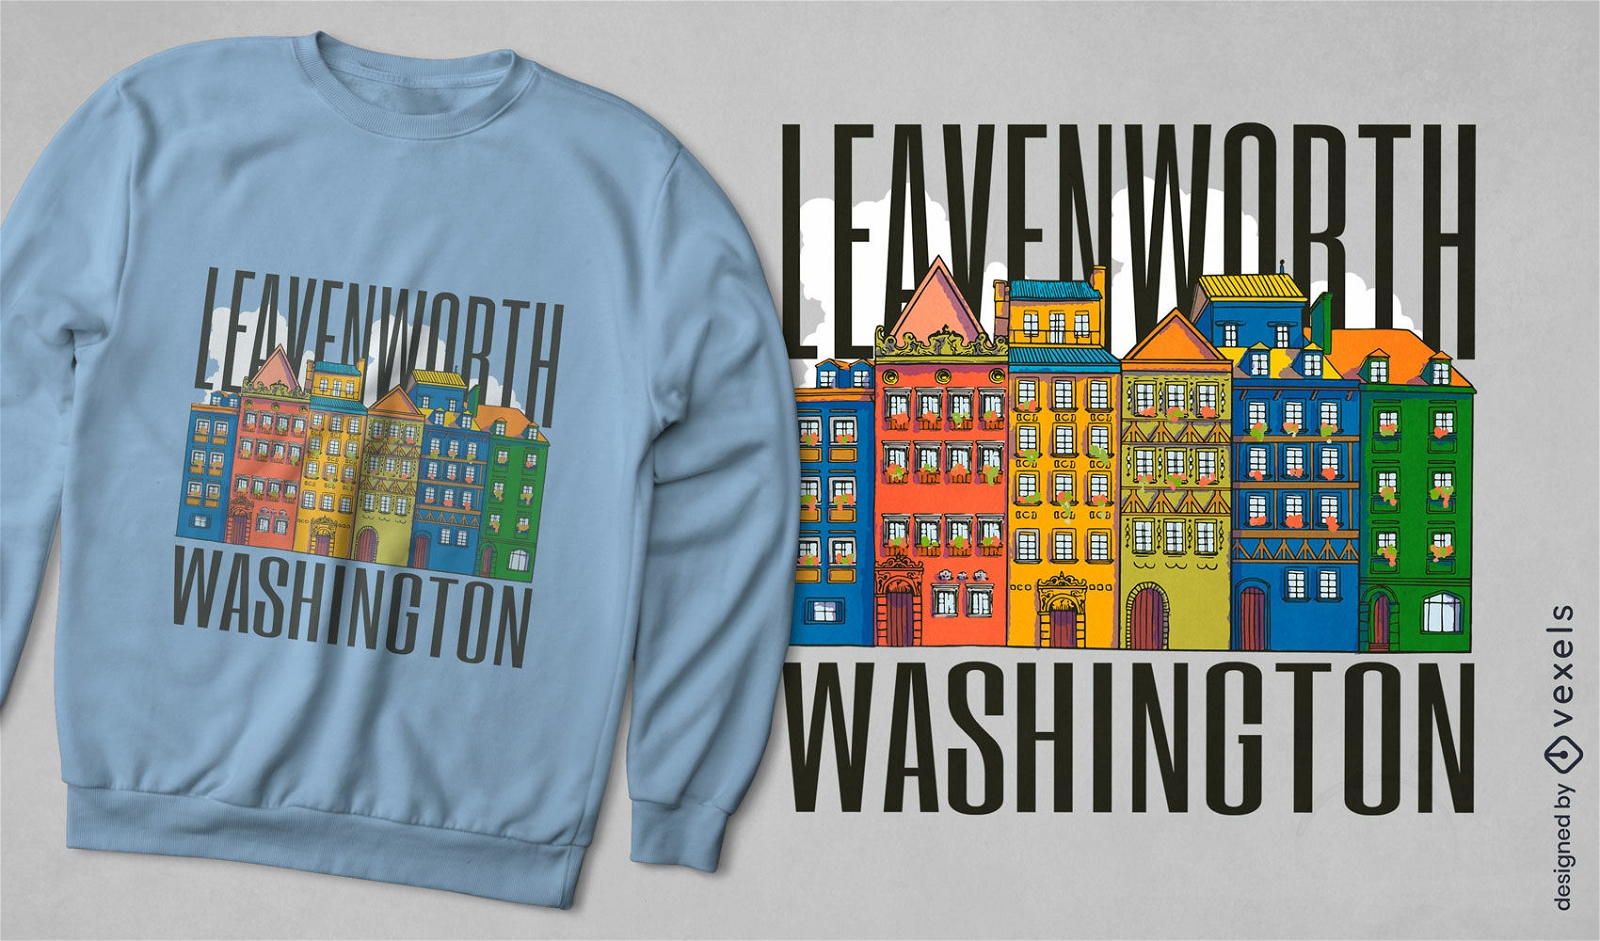 Dise?o de camiseta Leavenworth Washington